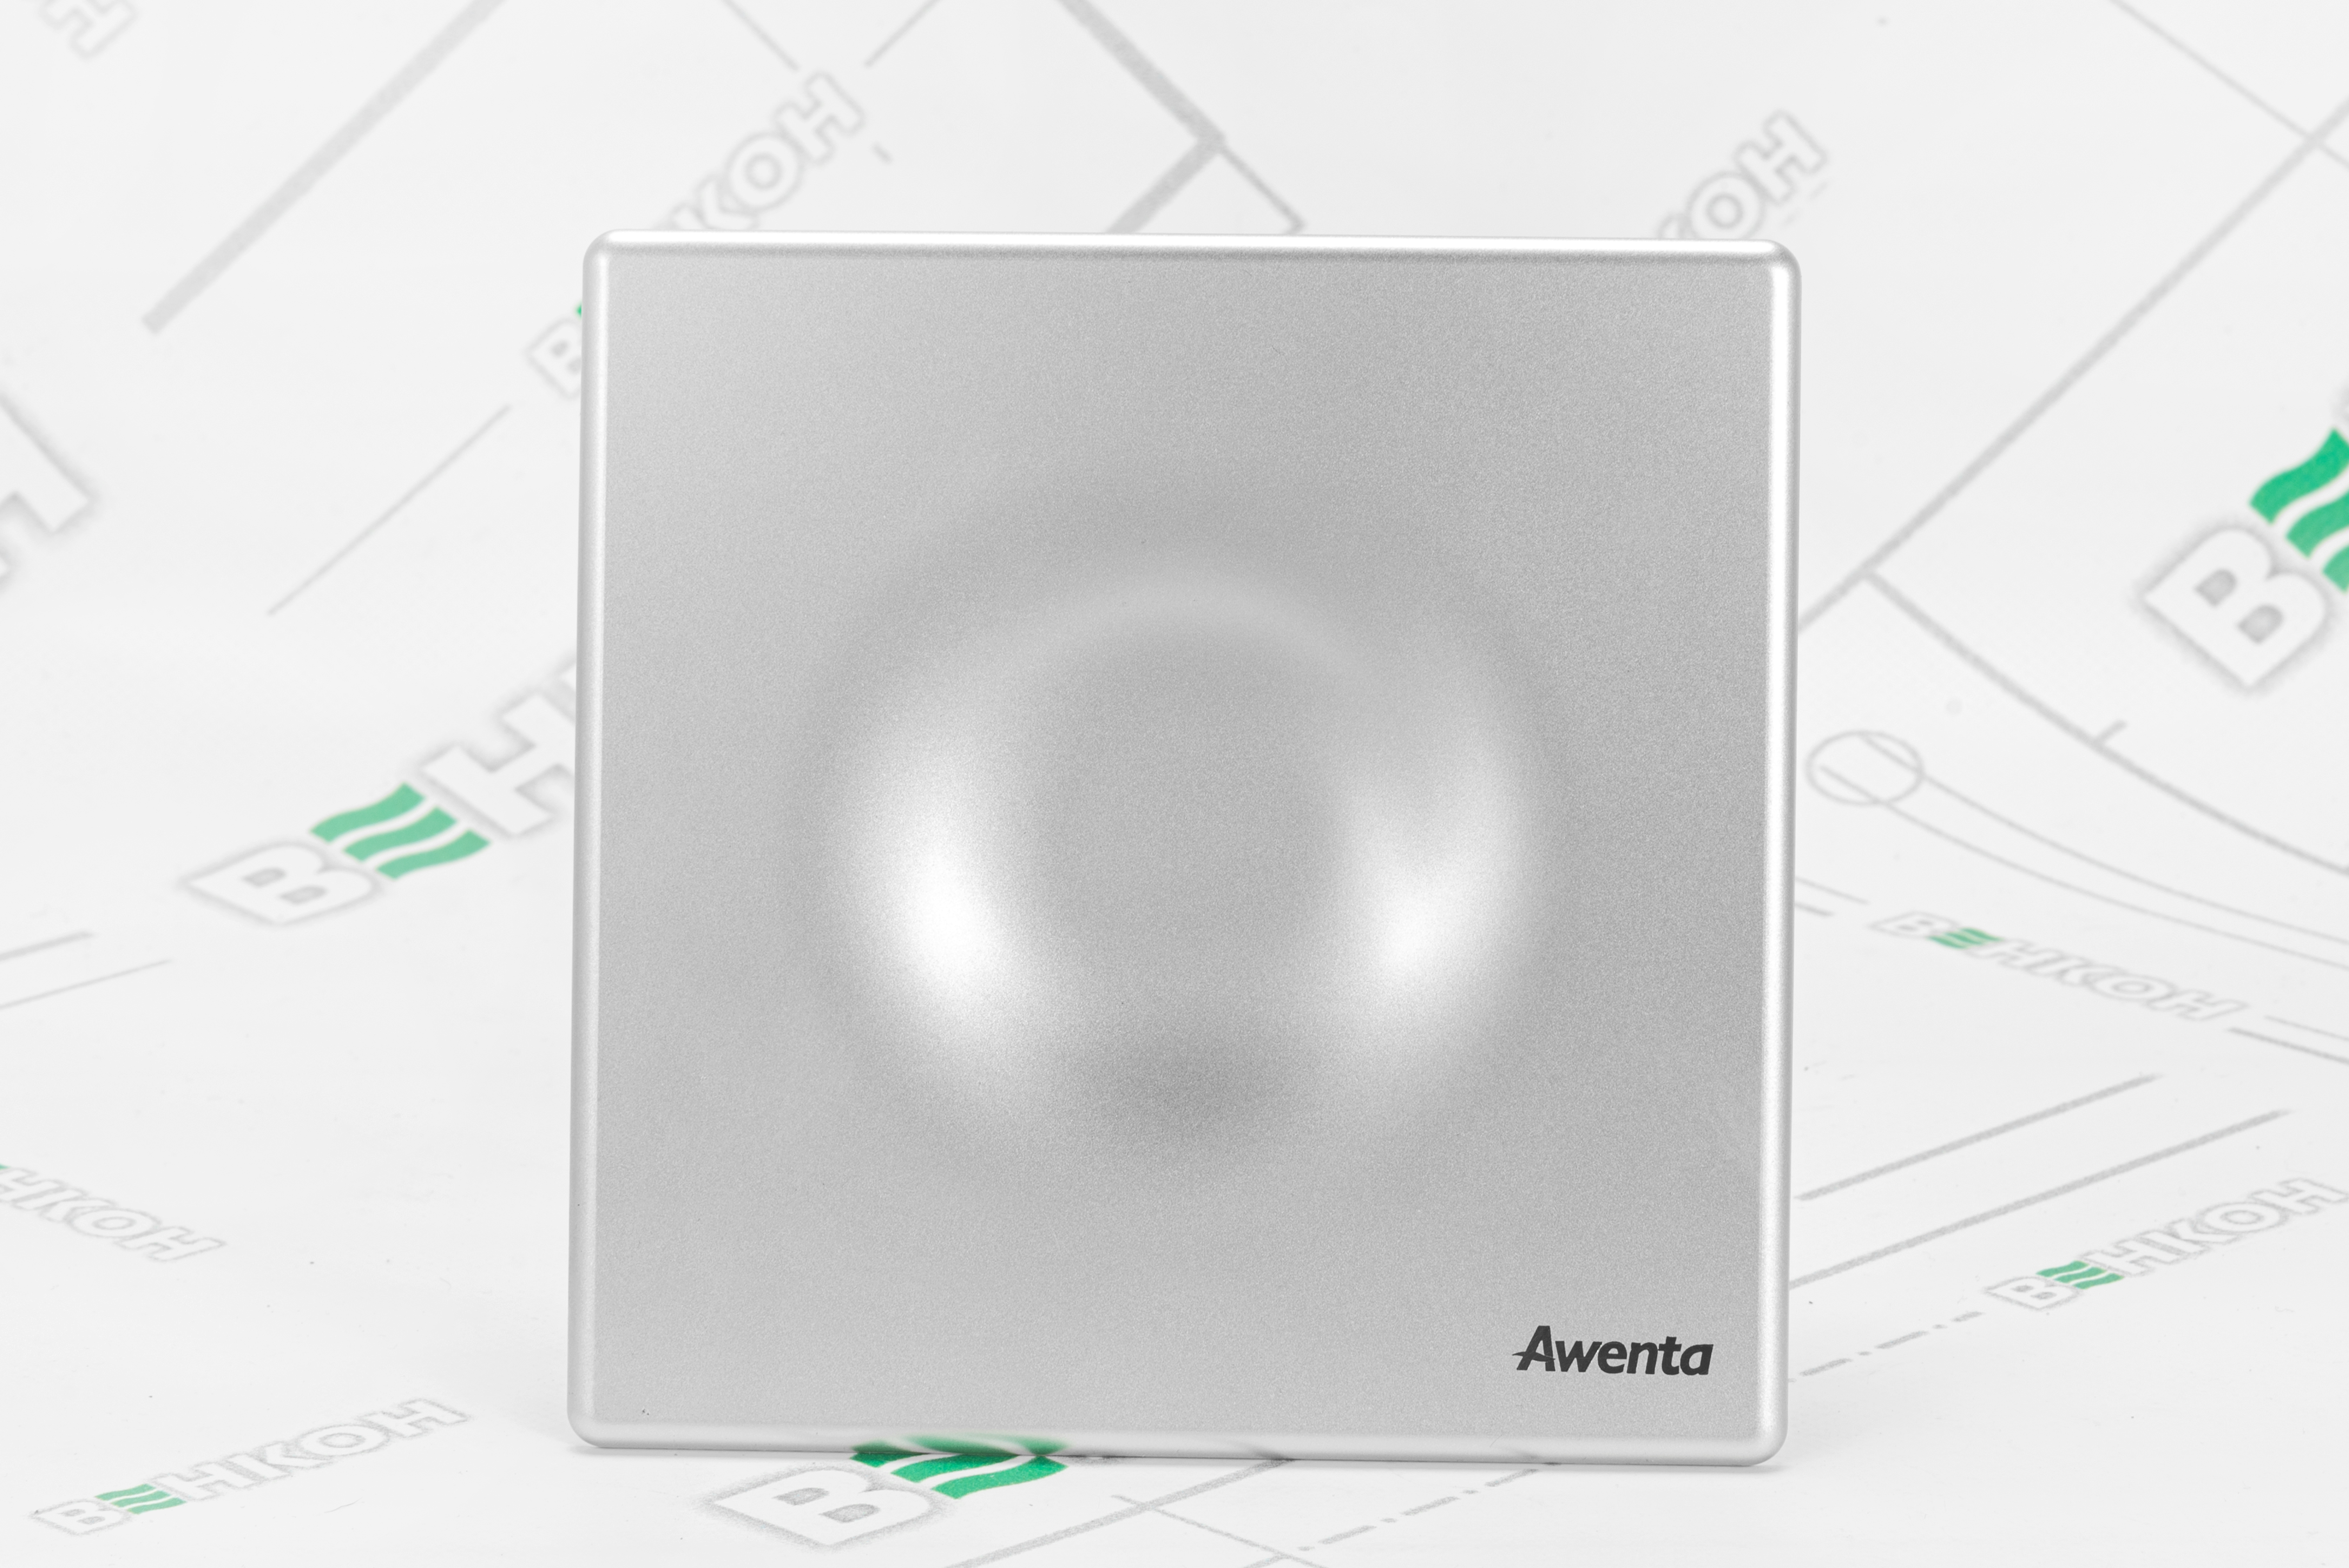 продаём Awenta System+ Silent KWS100-POS100 в Украине - фото 4